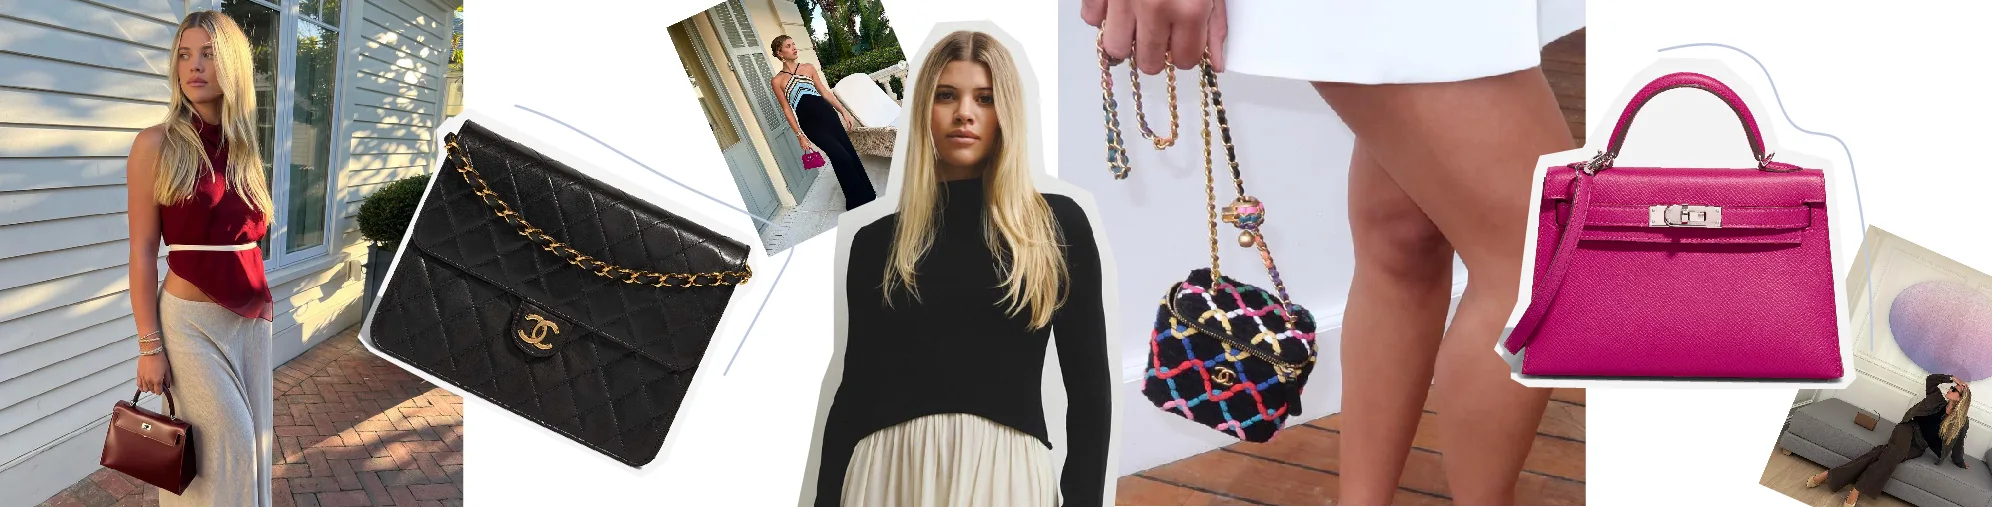 Celebrity Collector: Sofia Richie Grainge’s Top 6 Bag Styles